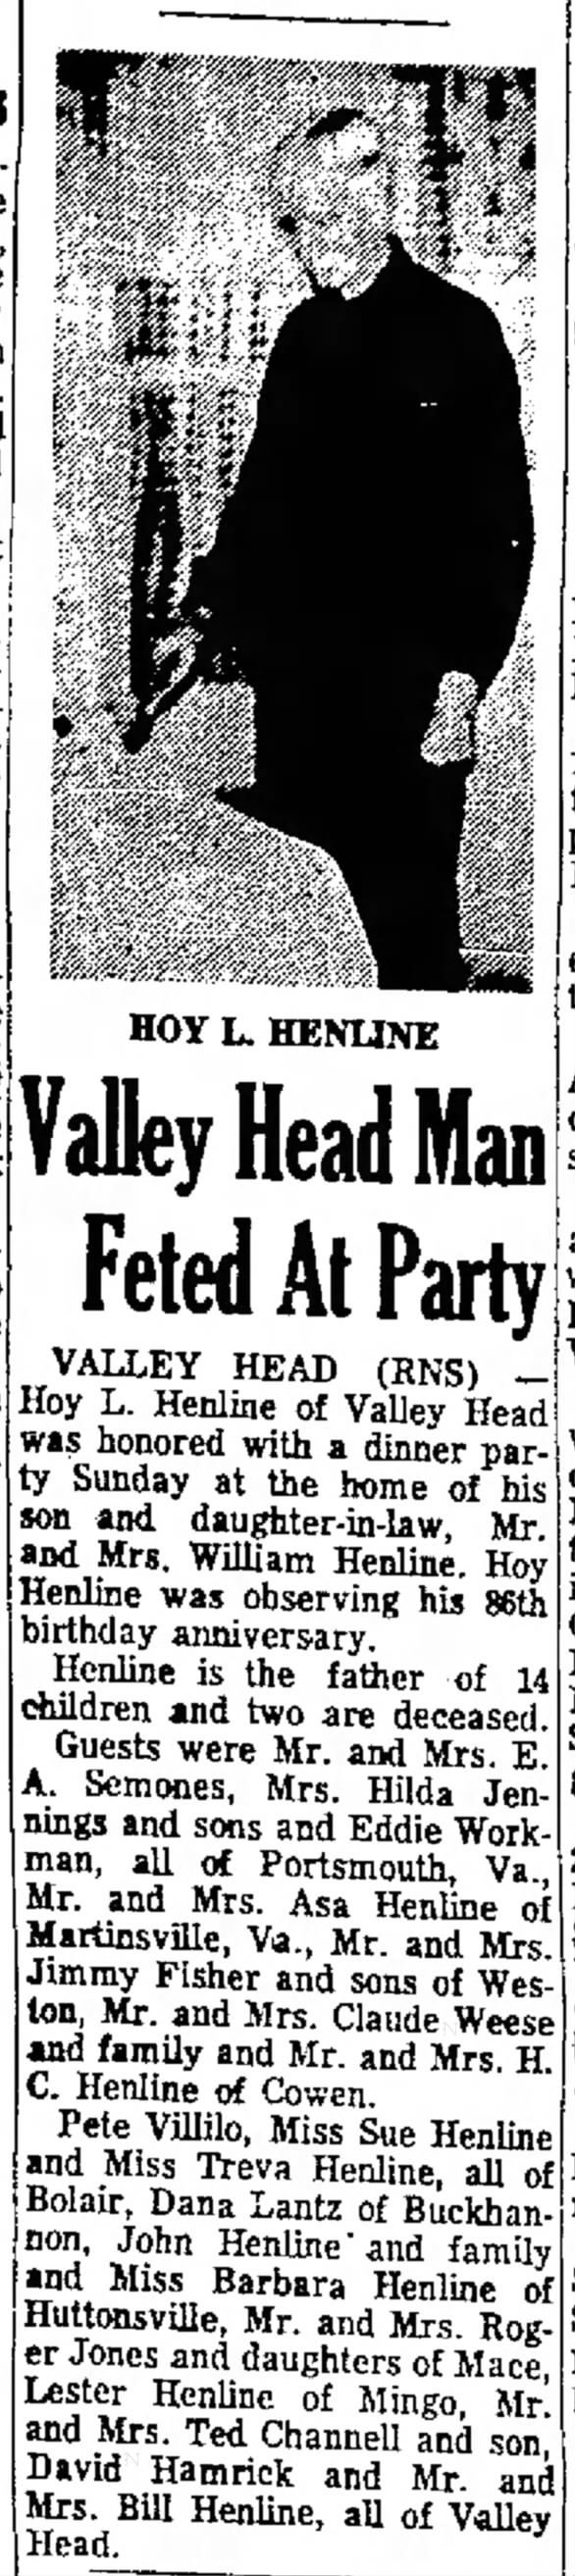 Henline, Hoy Lewis
Beckley Post Herald 31 Mar 1965 page2